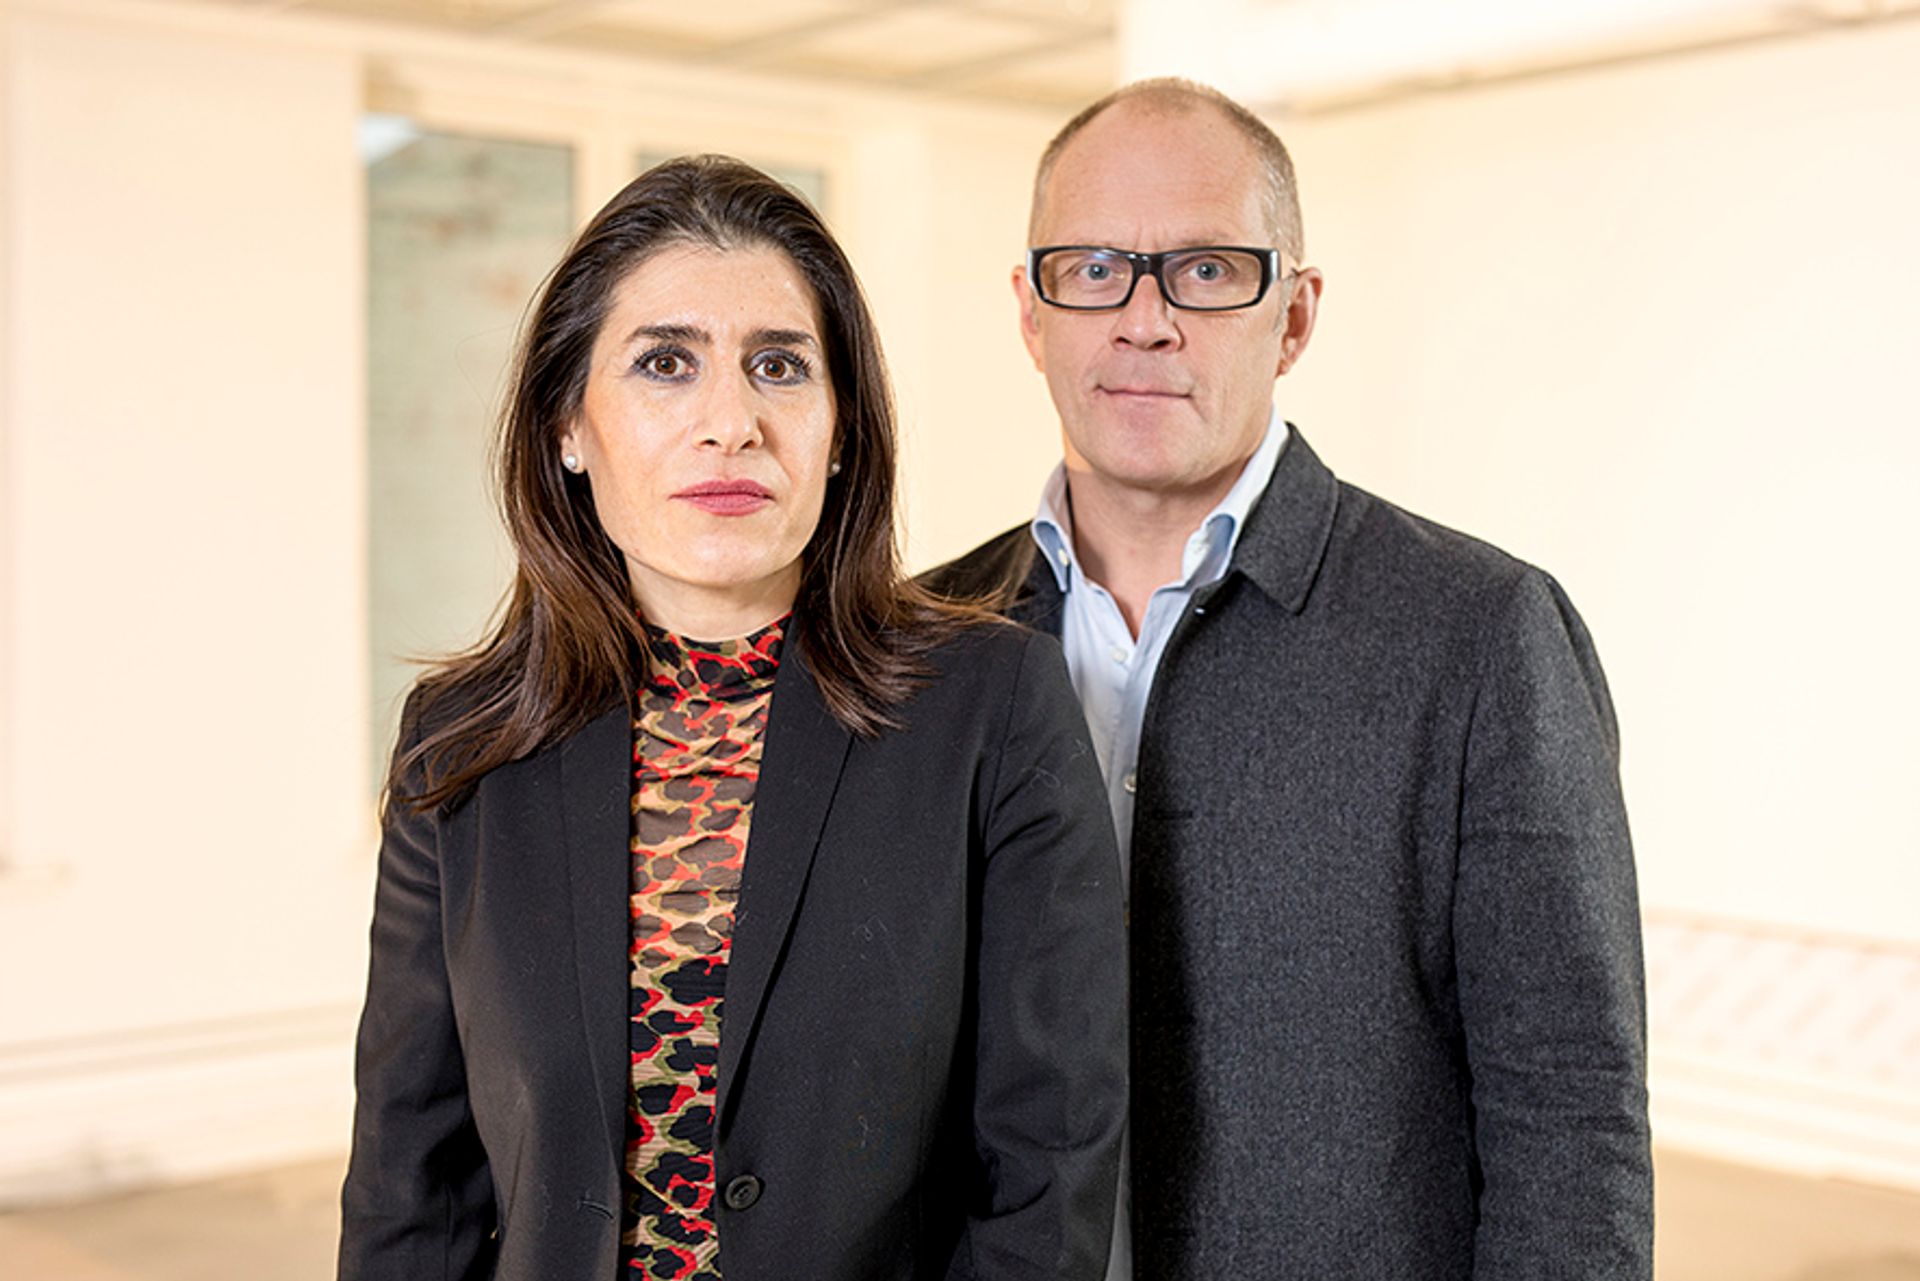 The Oslo Biennial curators Eva Gonzalez-Sancho and Per Gunnar Eeg-Tverbakk Niklas R. Lello